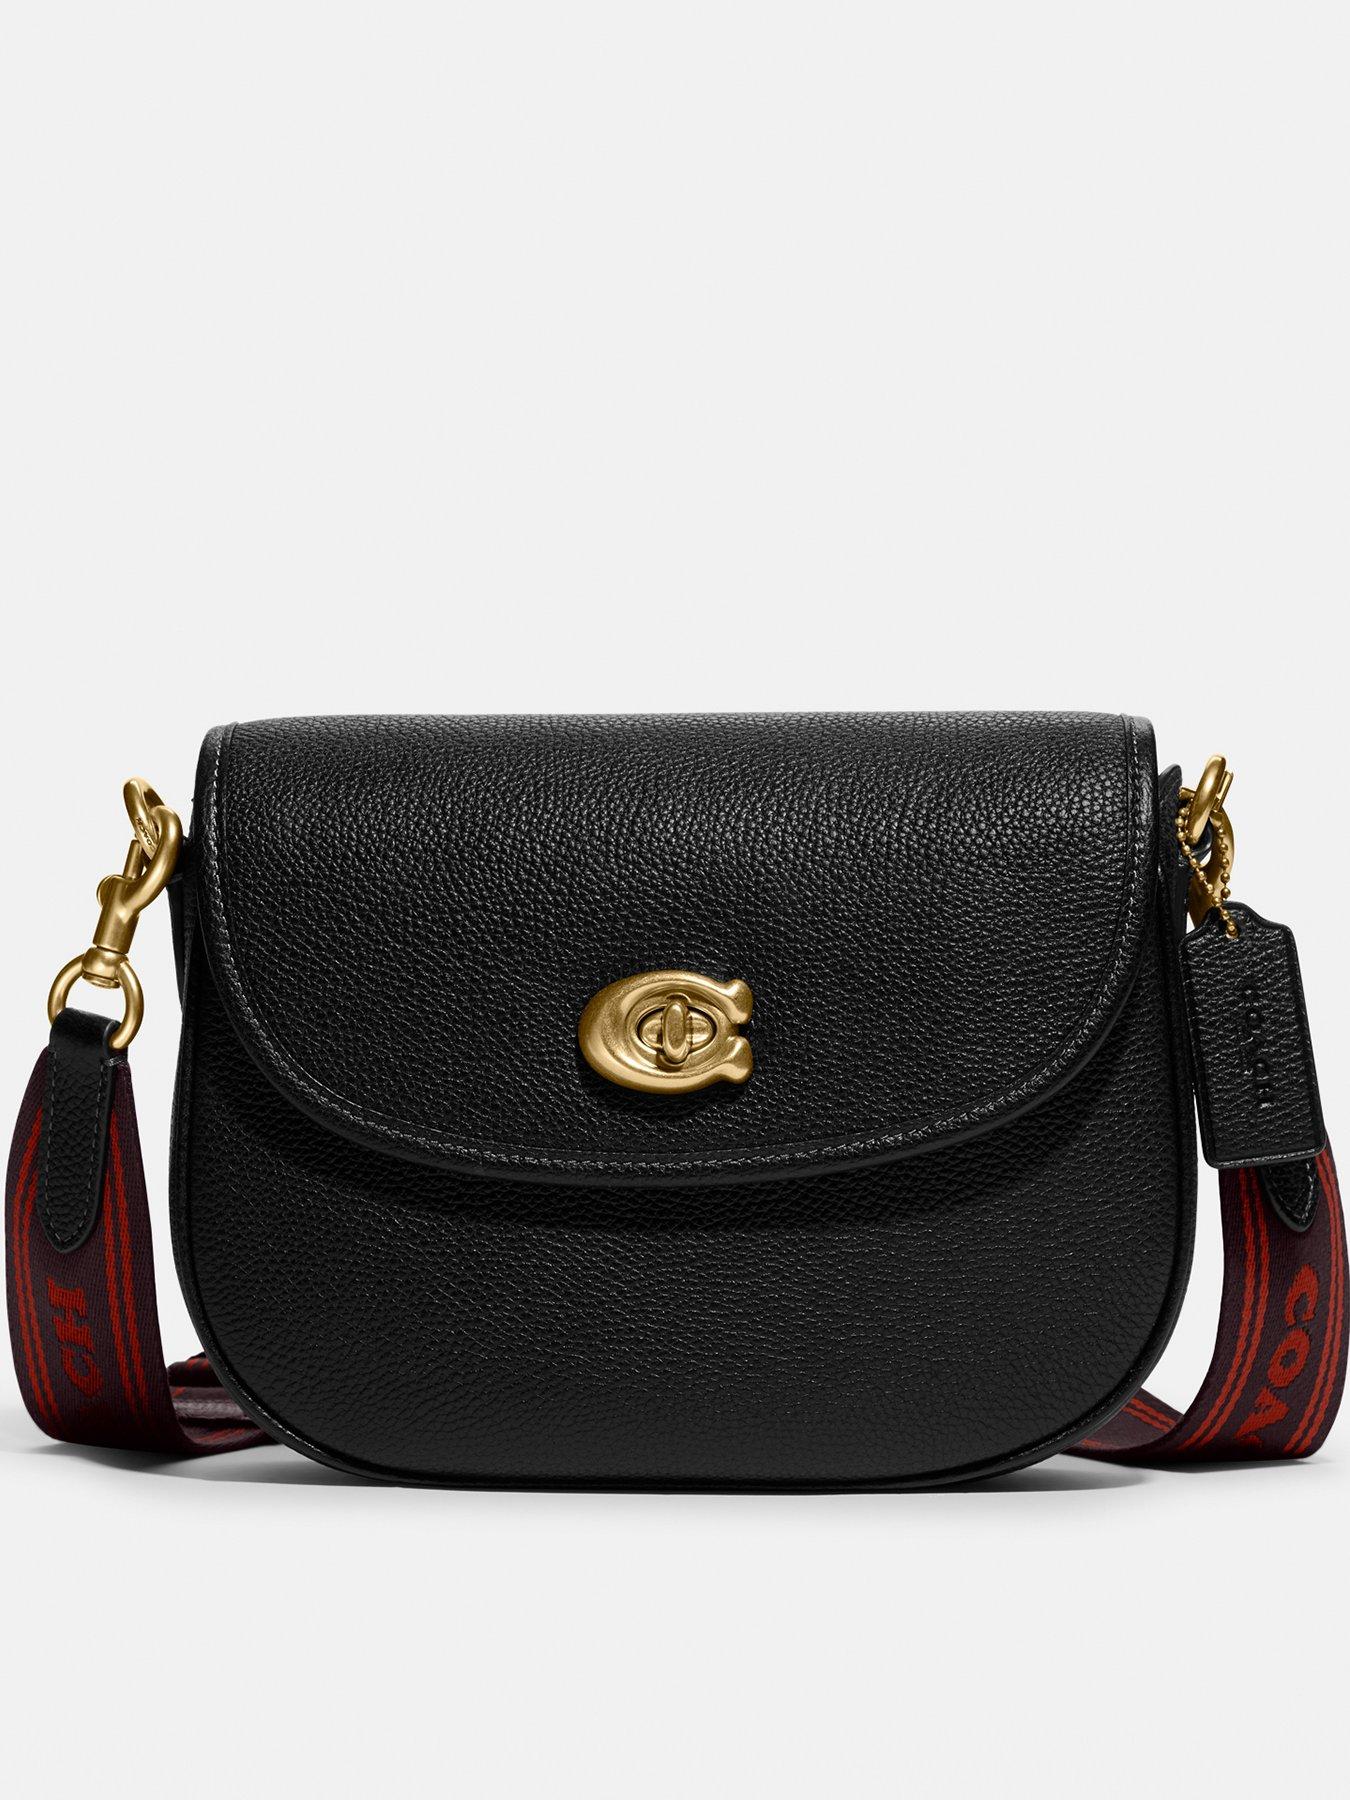 Black | Coach | Bags & purses | Designer brands 